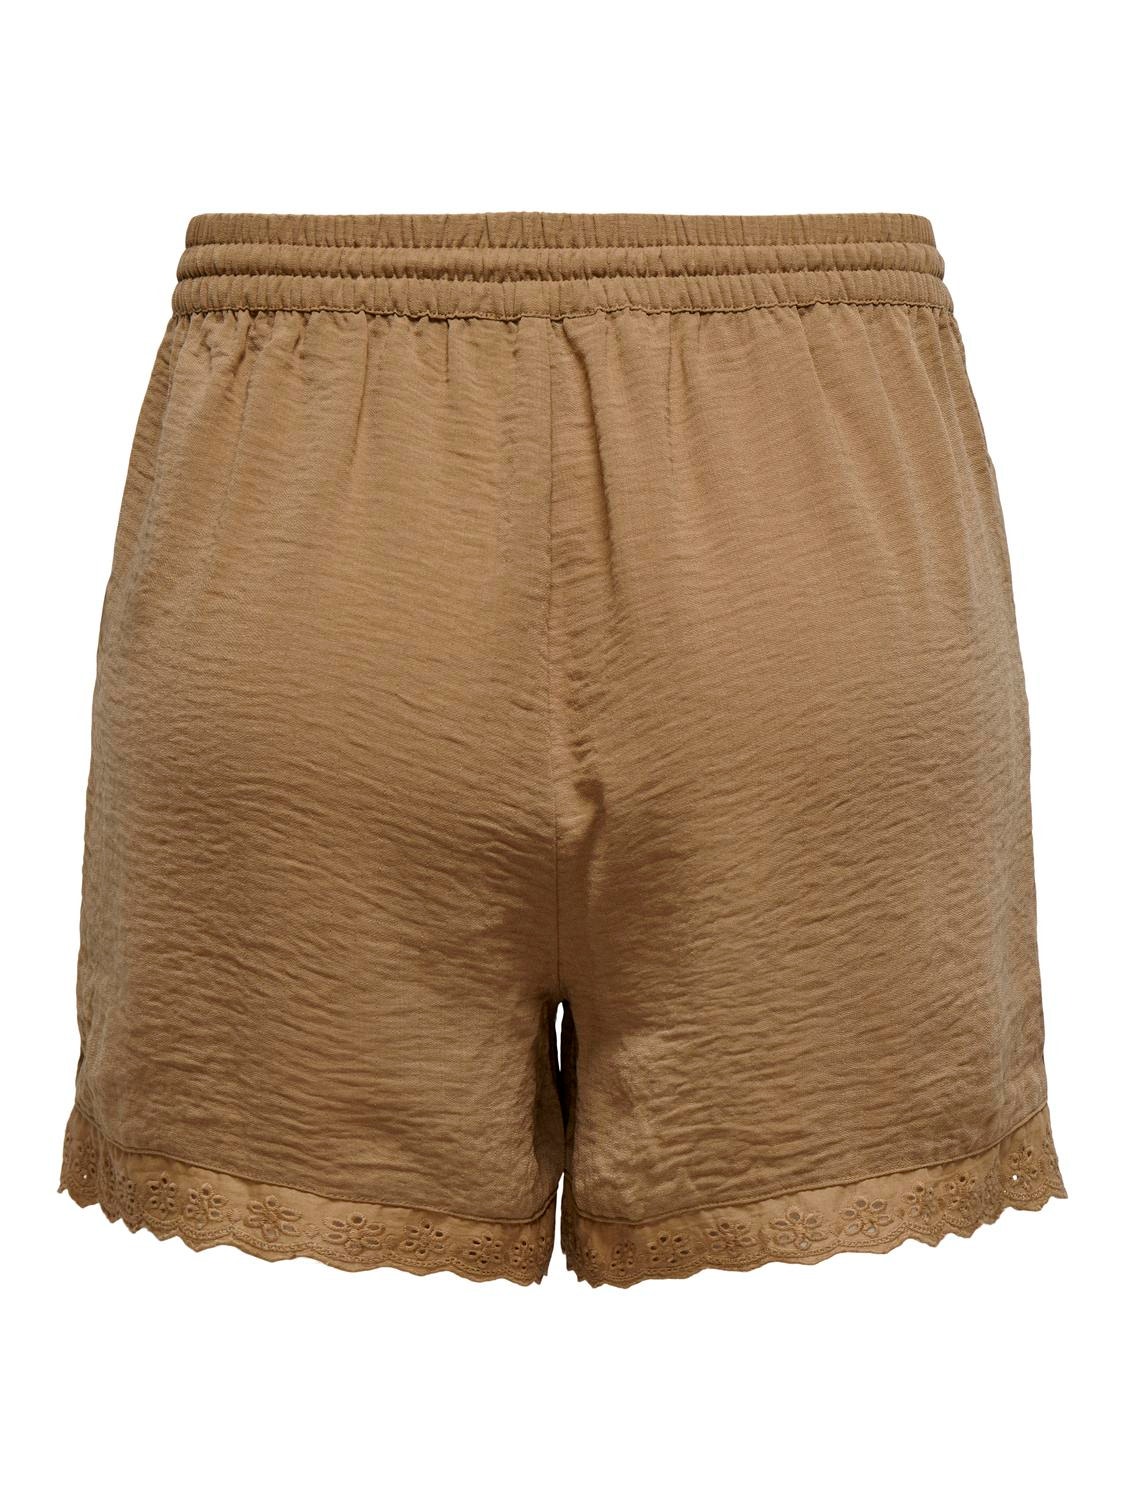 ONLY Shorts Corte regular Cintura alta -Toasted Coconut - 15295675